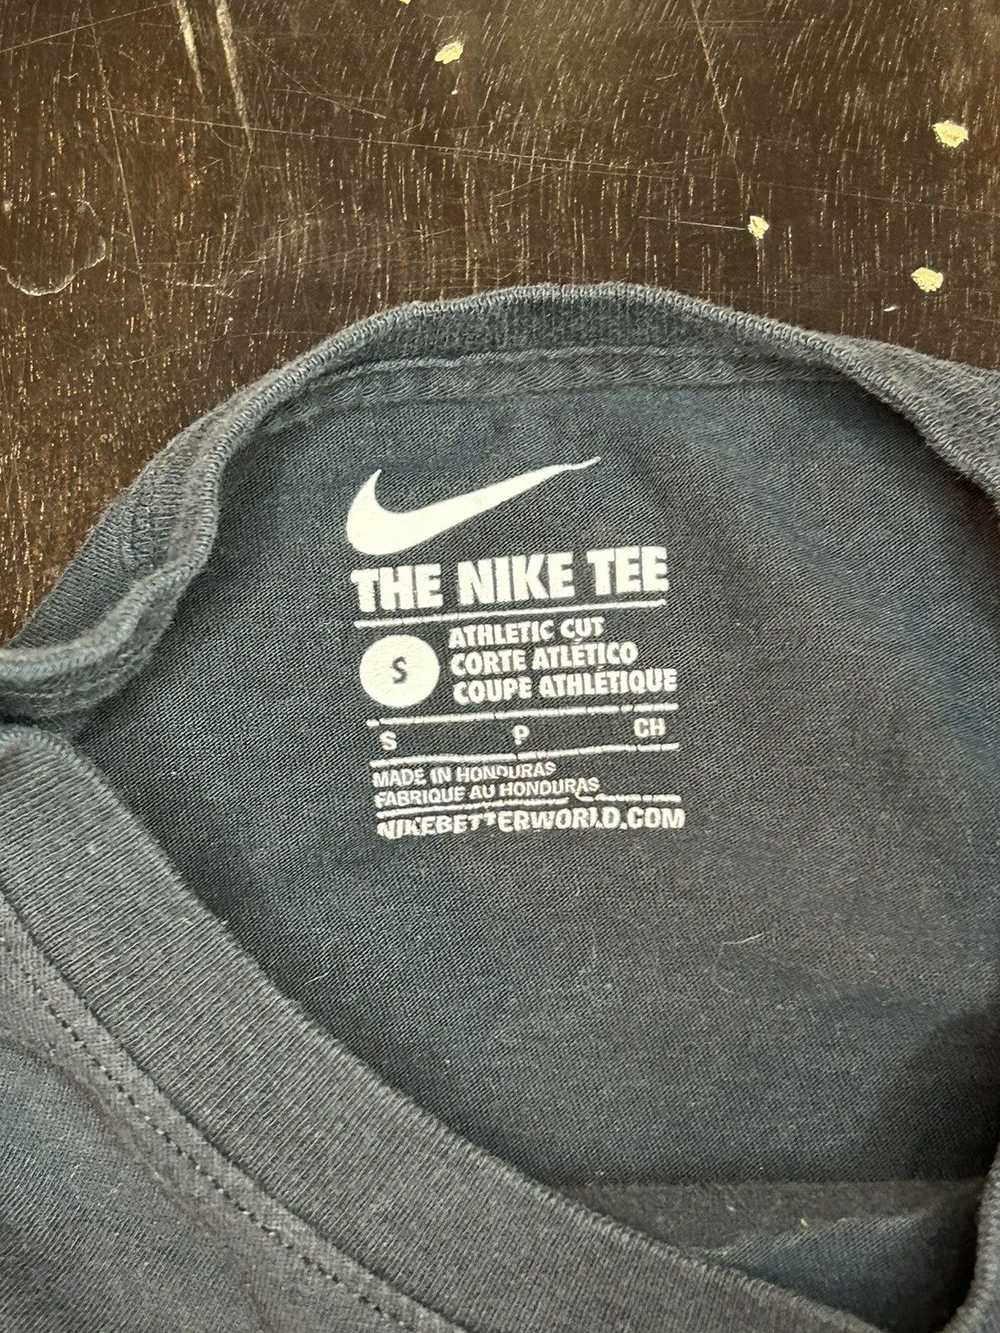 Nike Team USA Wrestling long sleeve dry fit shirt - image 3